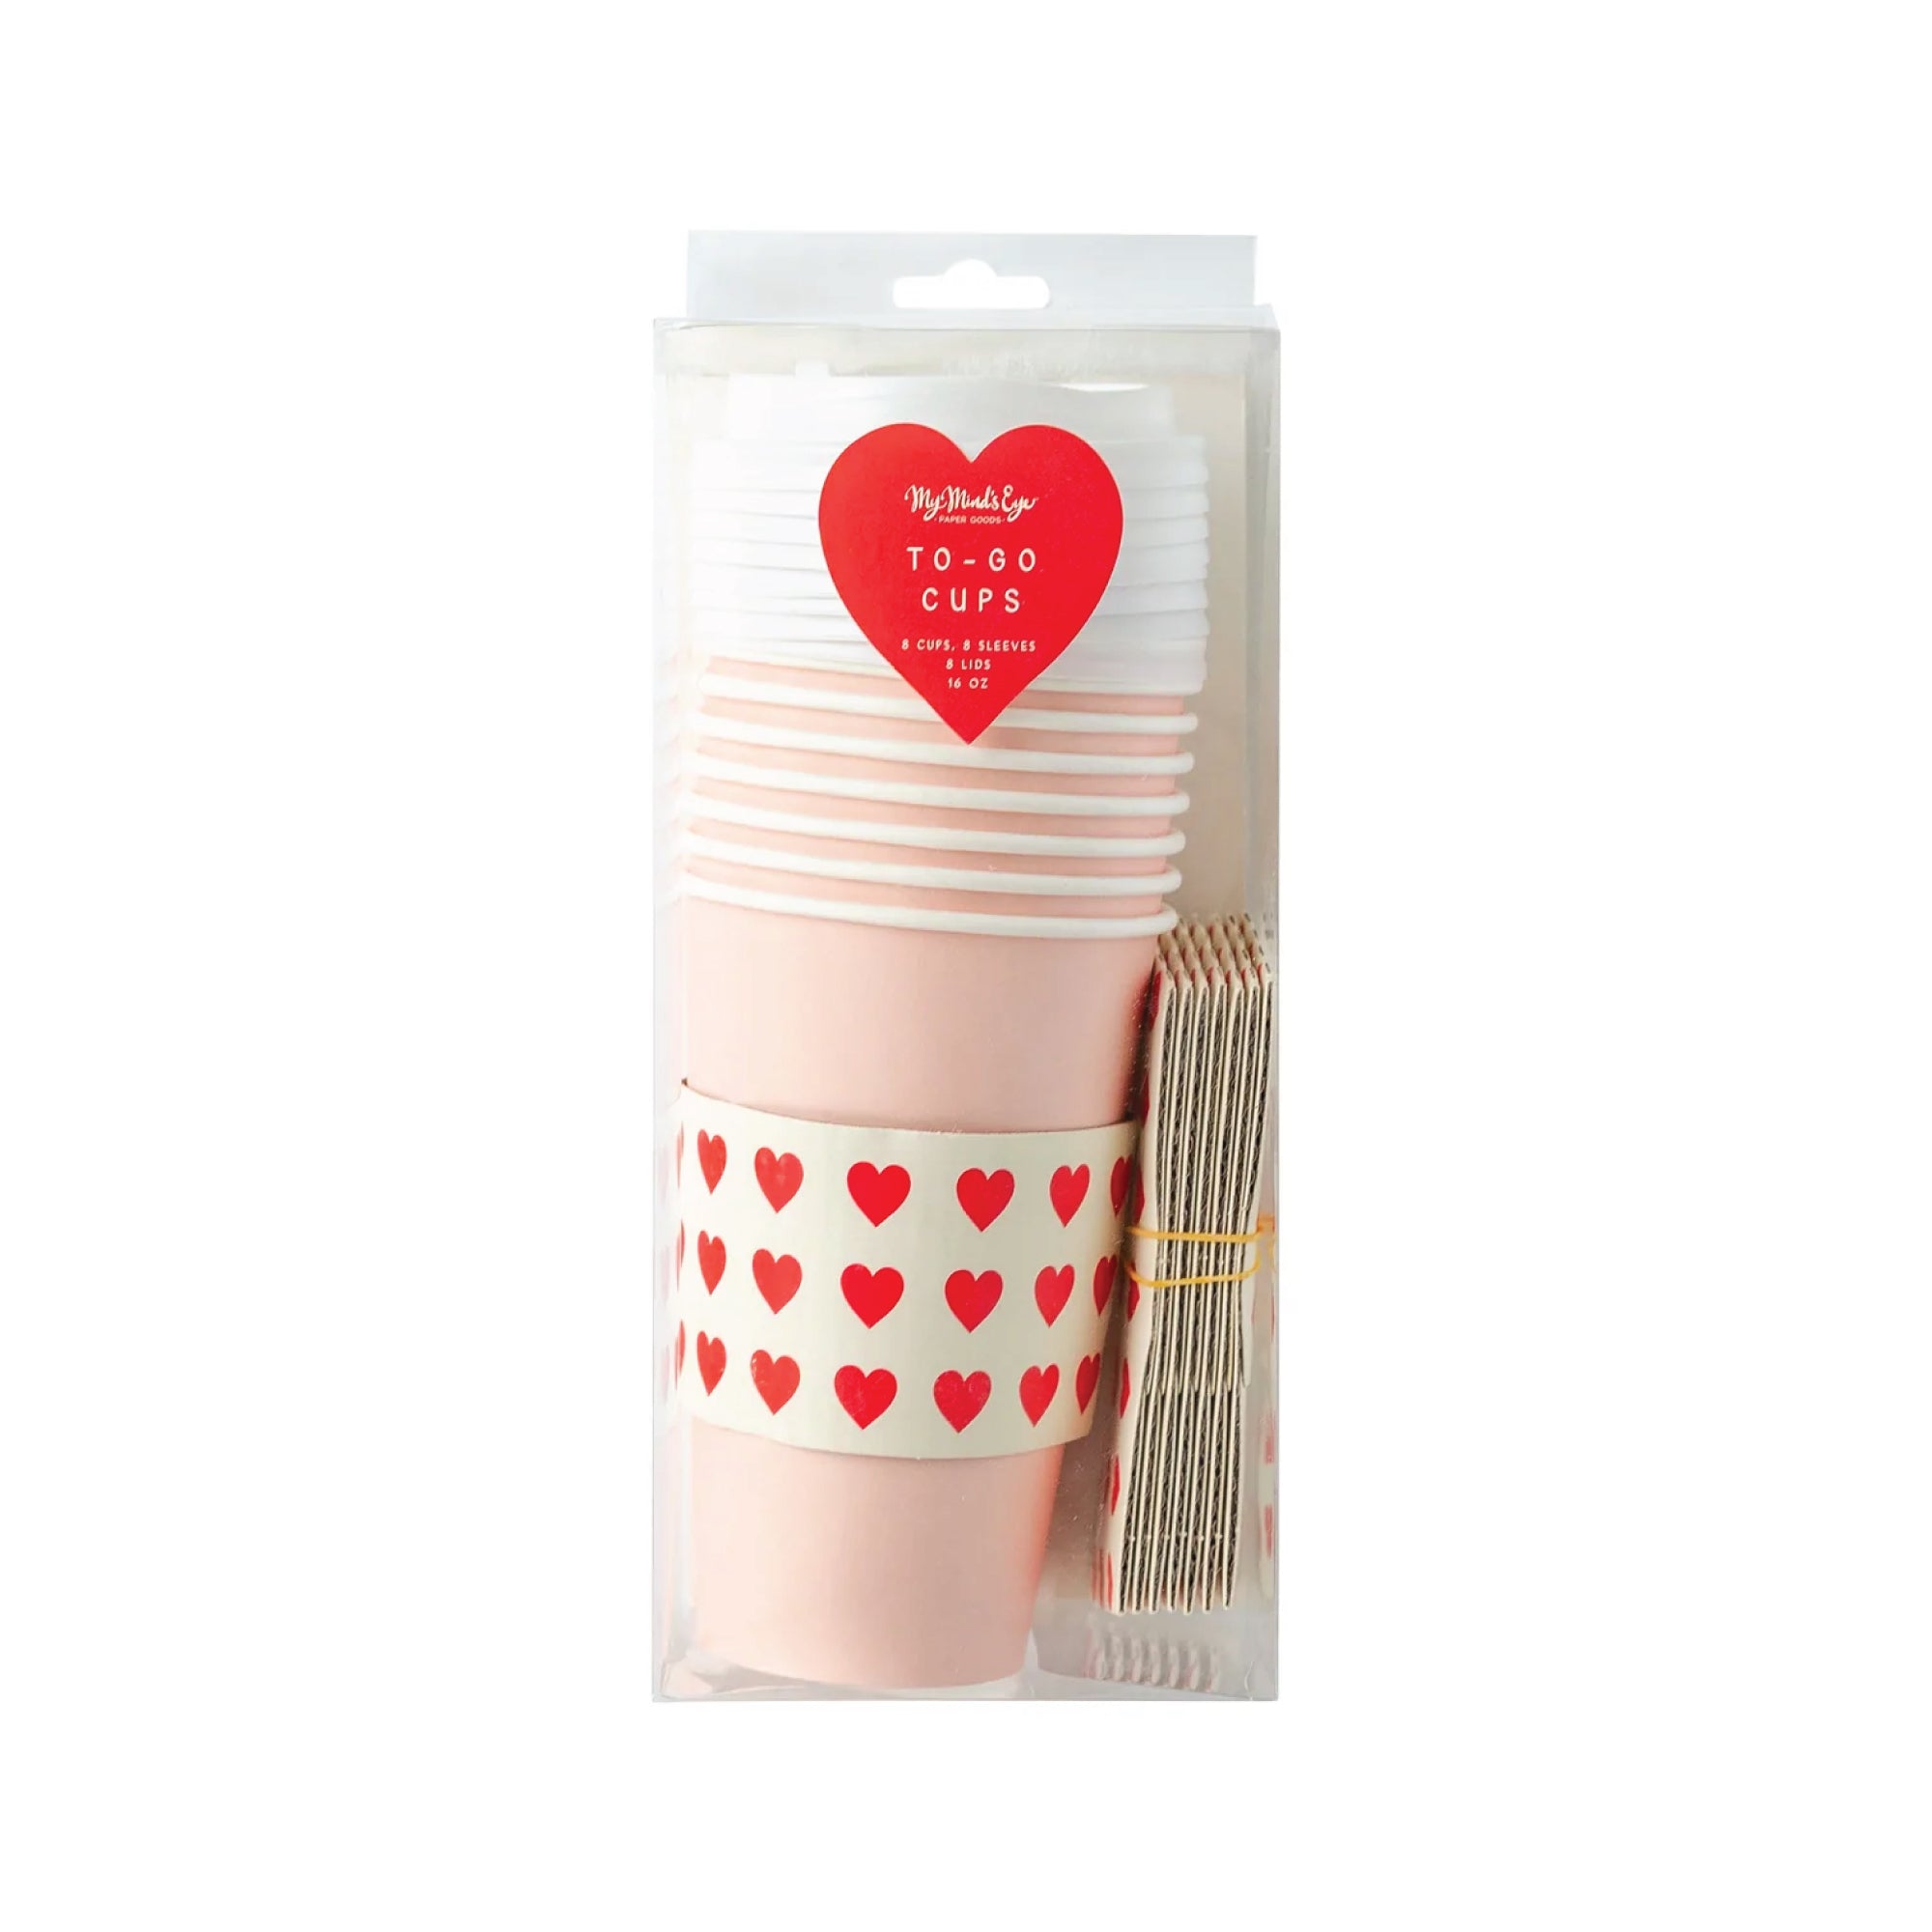 Valentine's Day Paper Cups 8ct